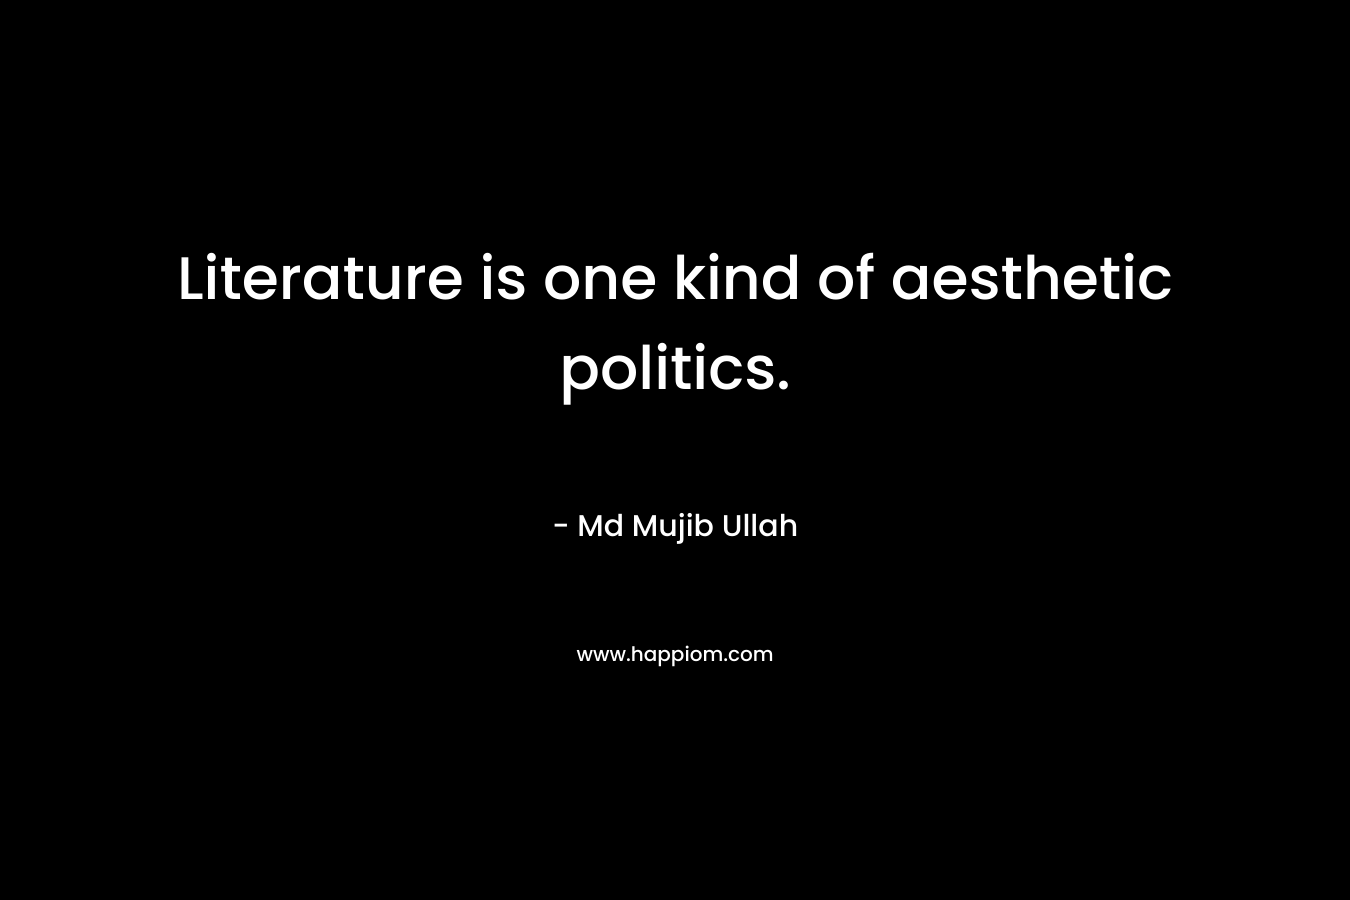 Literature is one kind of aesthetic politics.